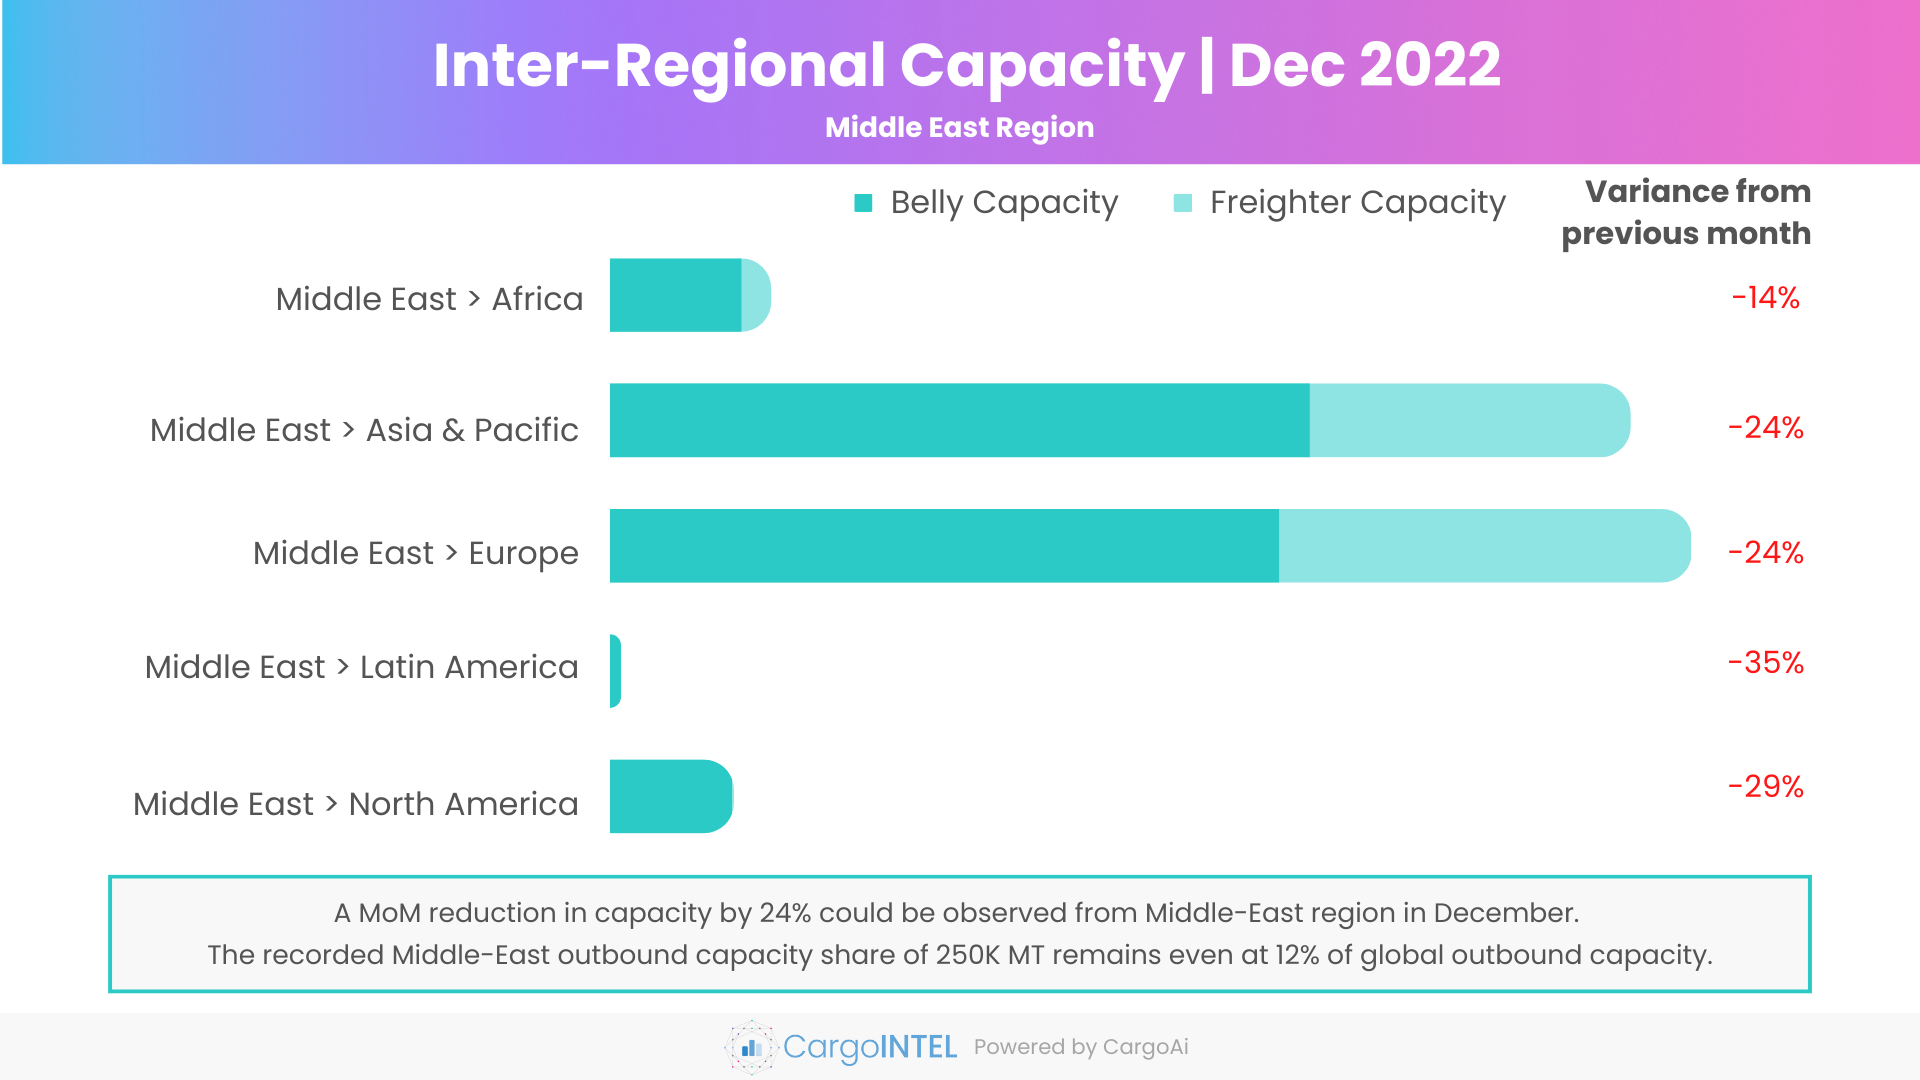 Air cargo capacity of Middle East region of Dec 2022